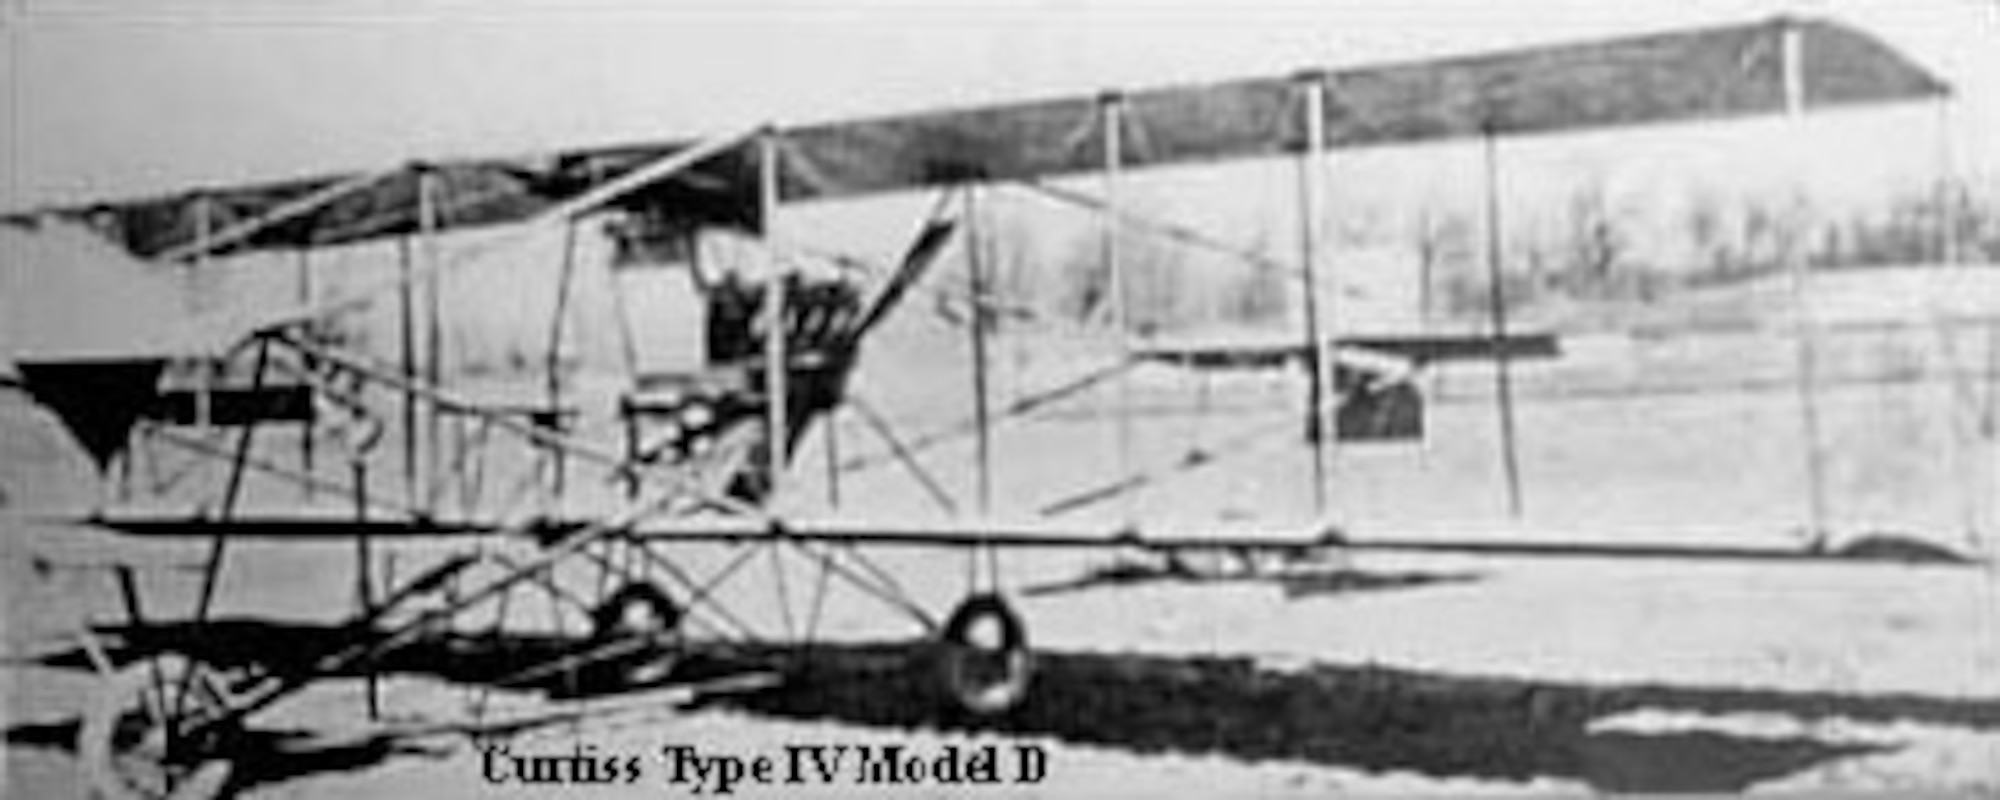 Curtiss Type IV Model D. (U.S. Air Force photo)